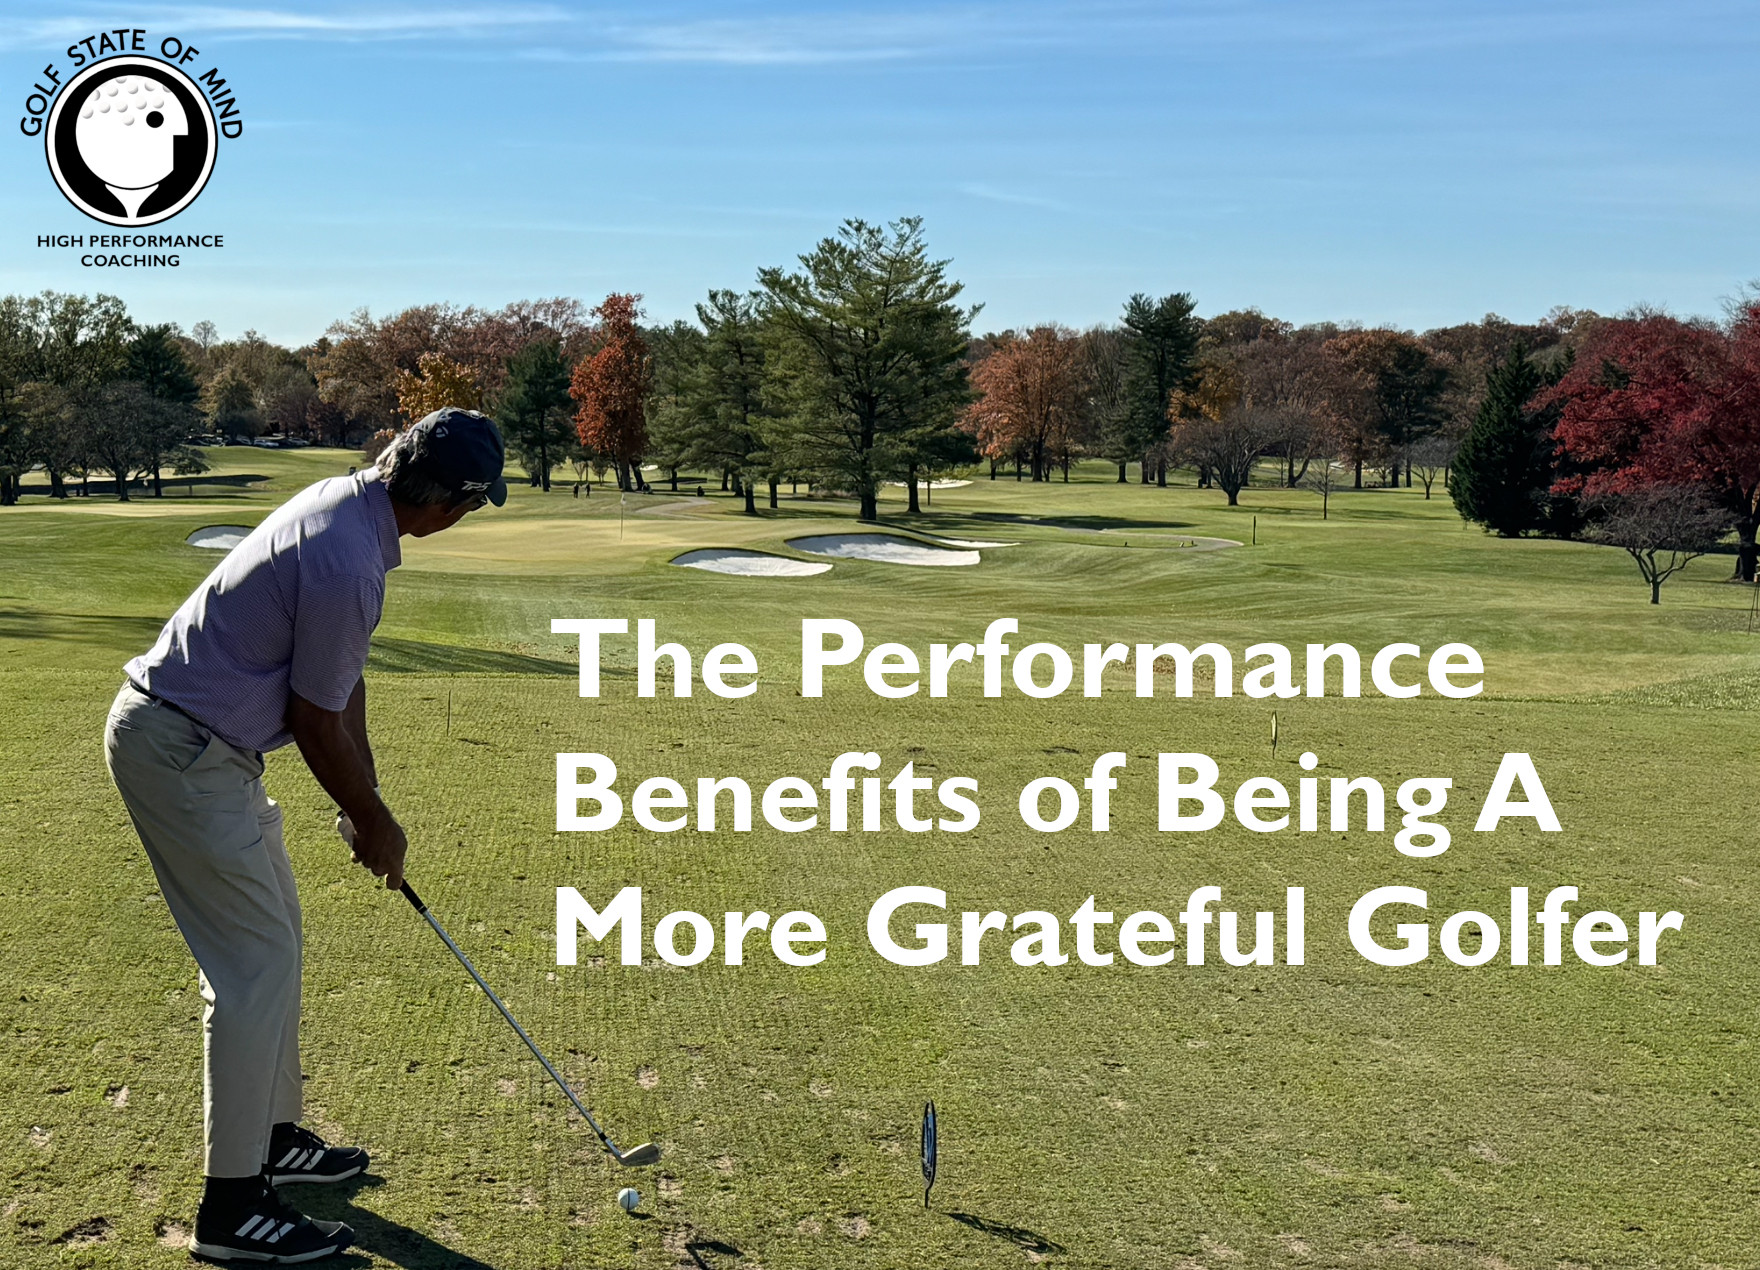 Grateful Golfer